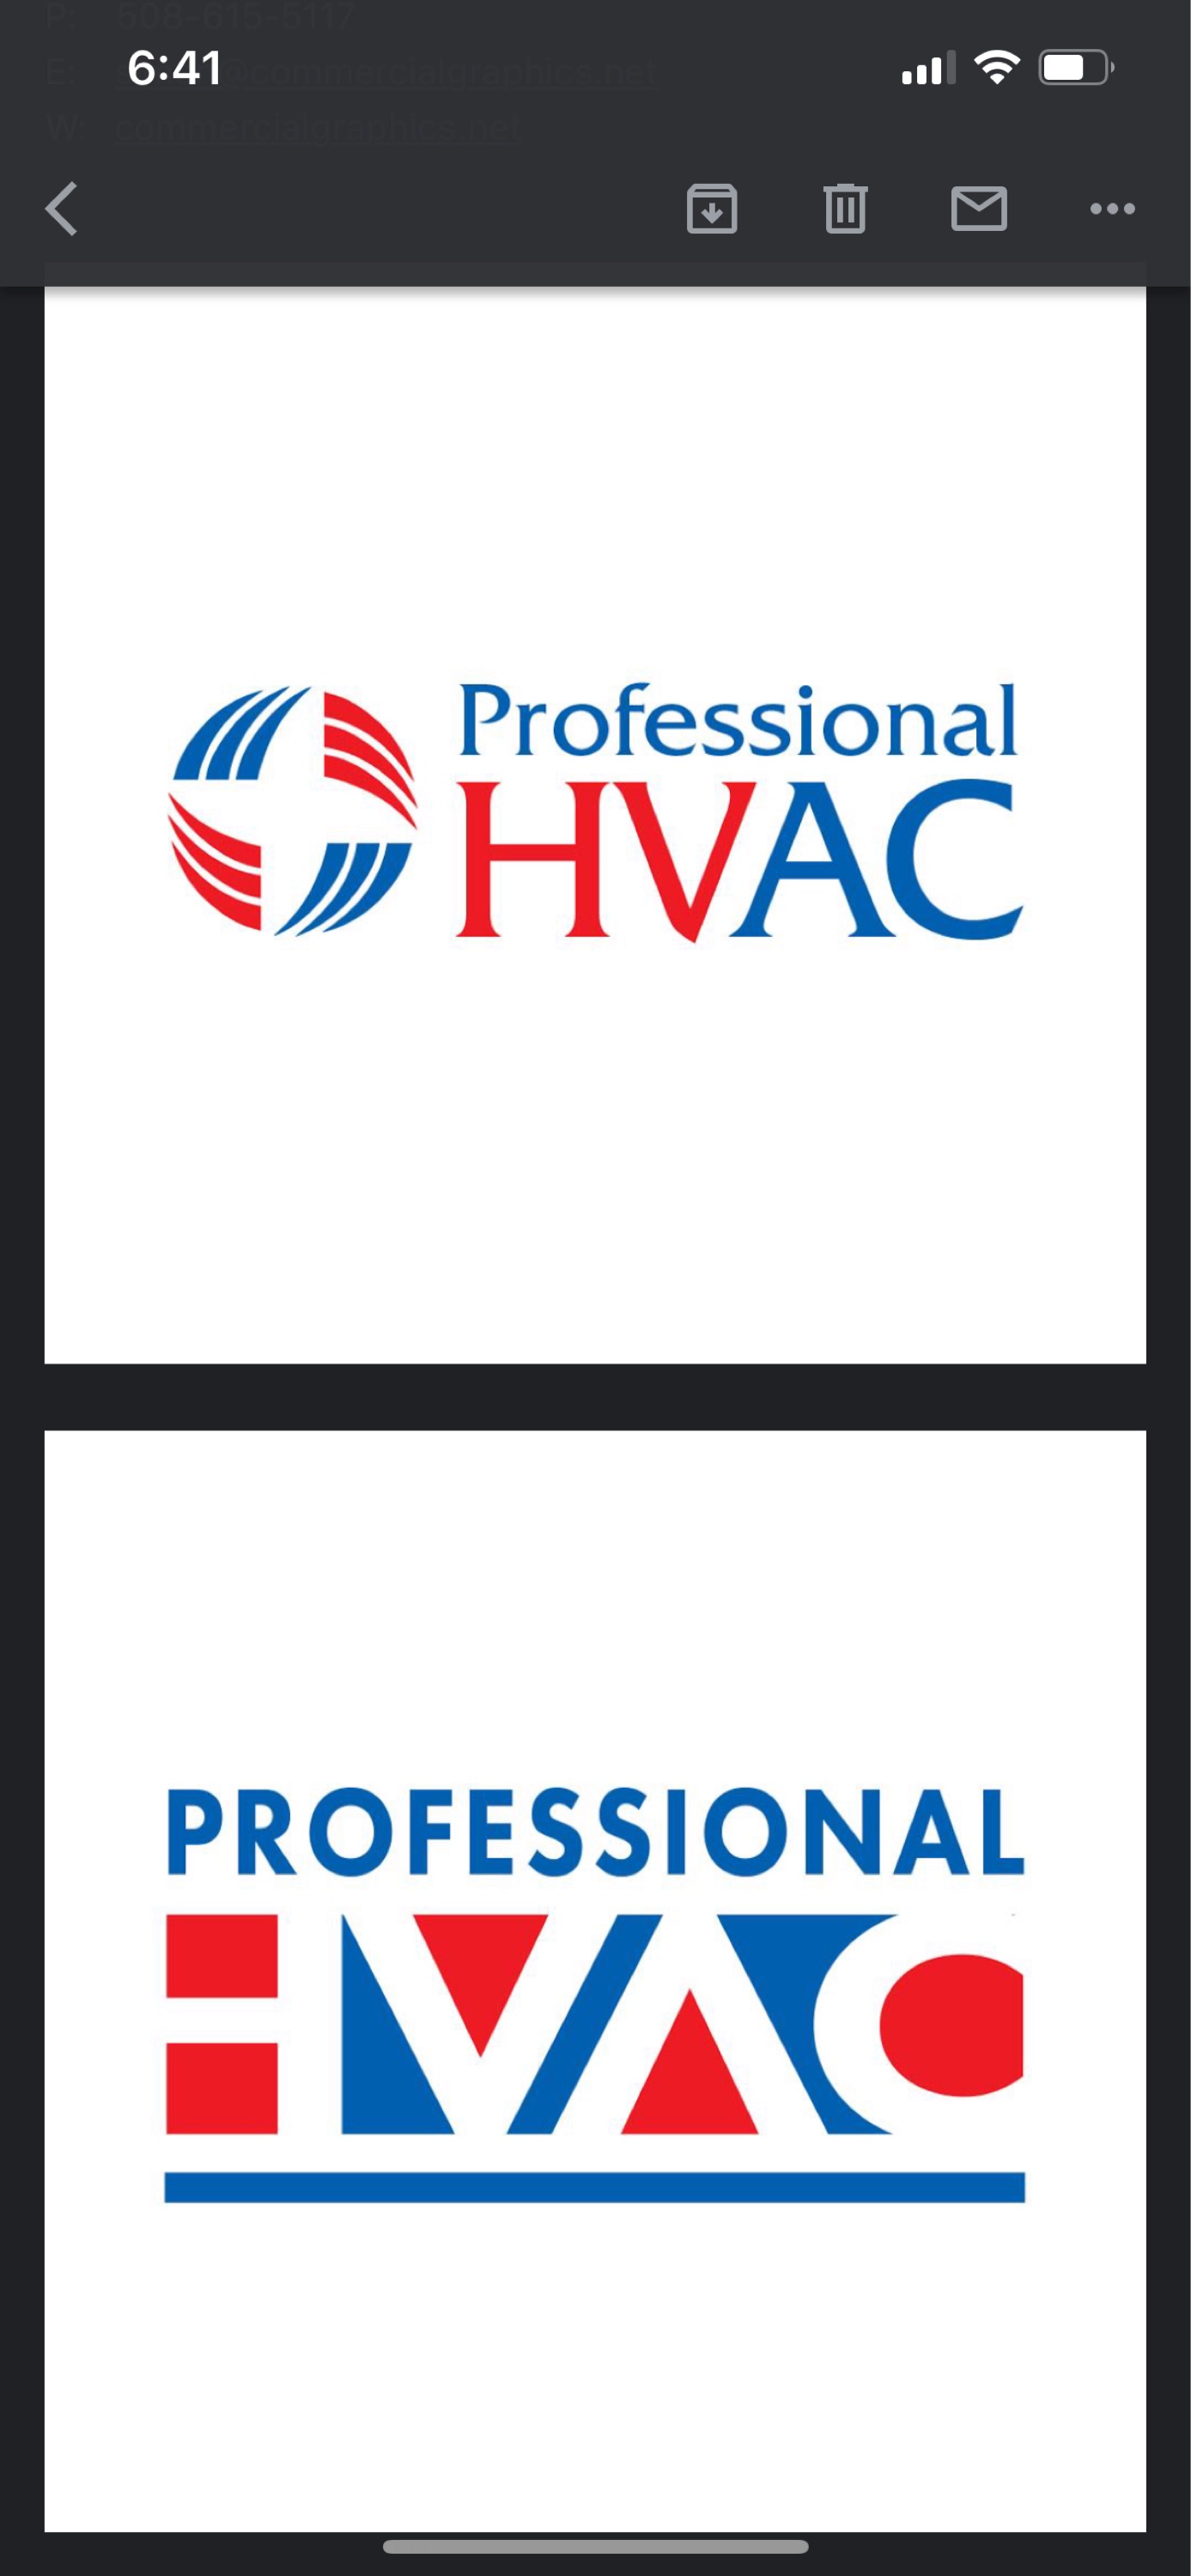 Professional HVAC, Inc. Logo